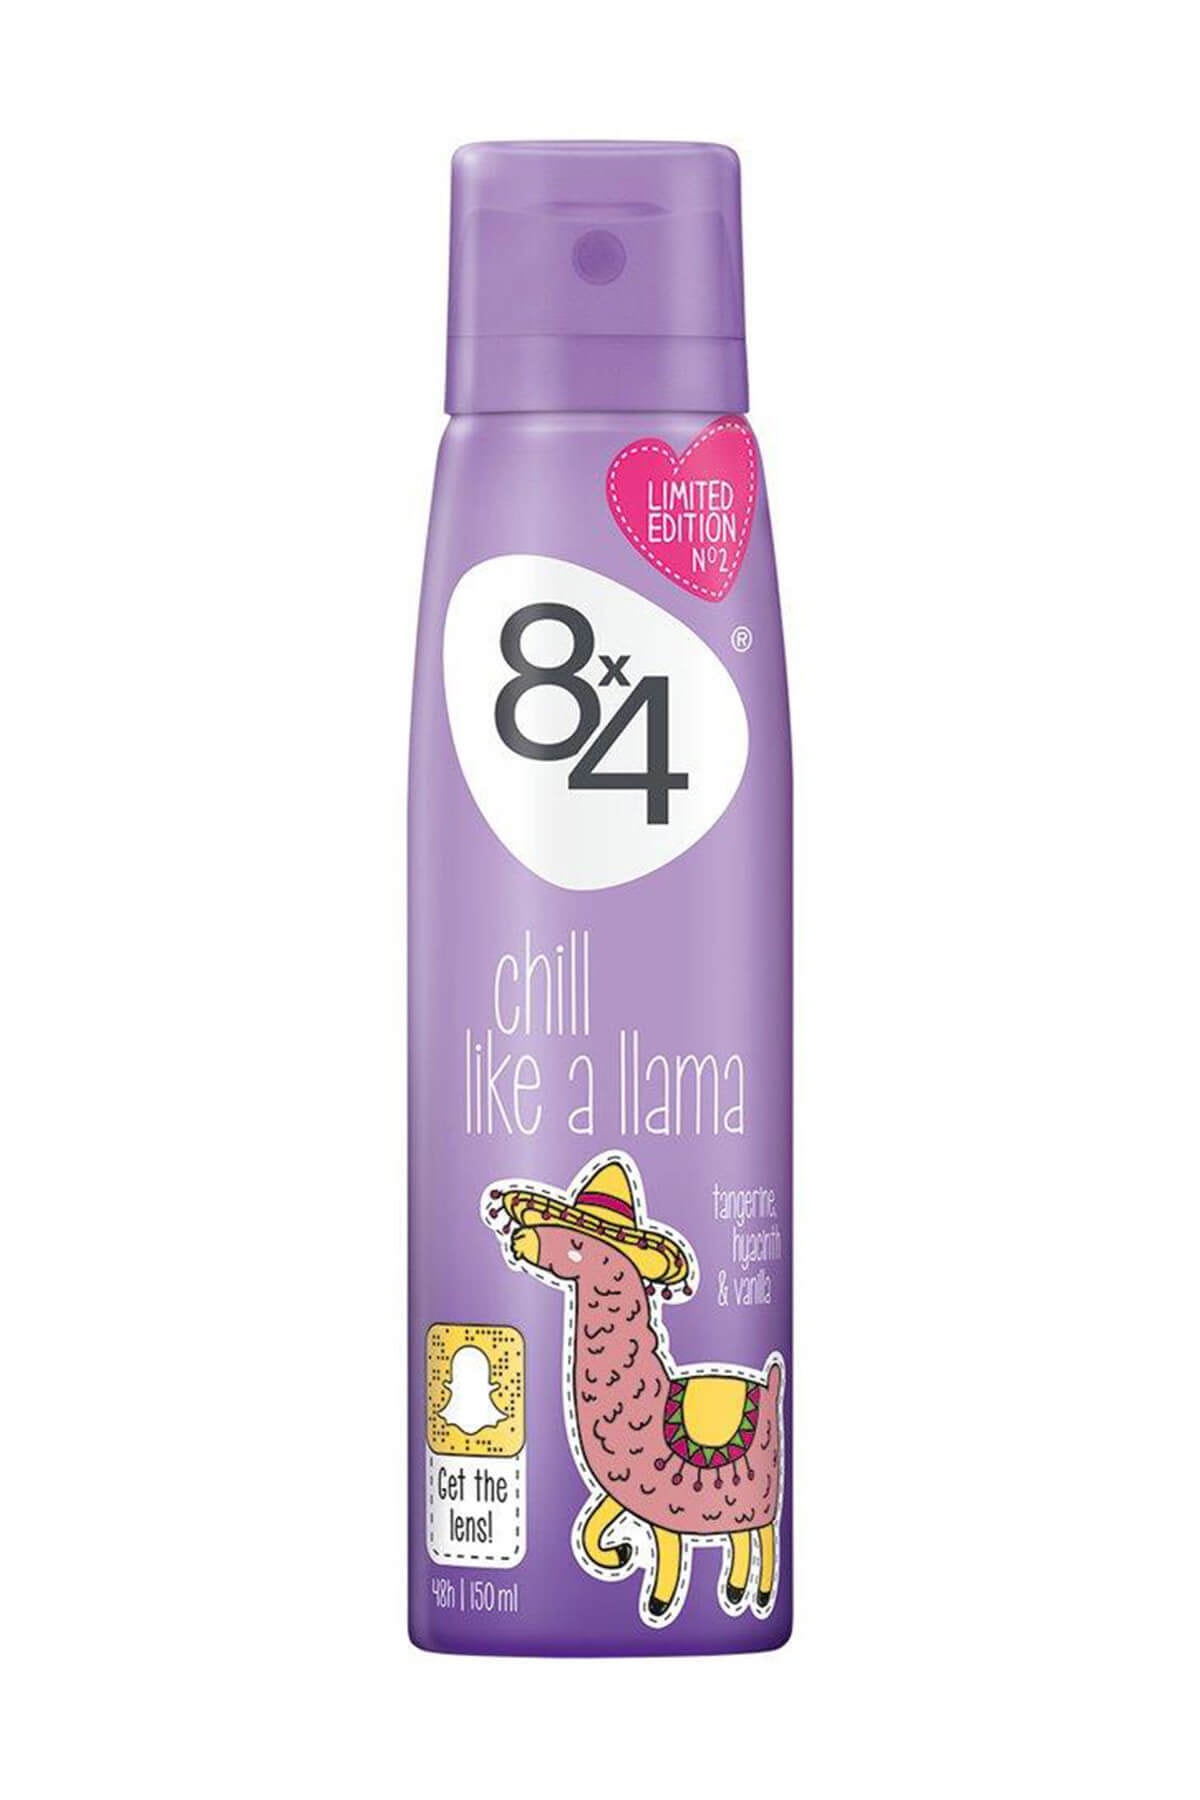 8x4 Kadın Deodorant Chill Like A Llama Limited Edition 150ml